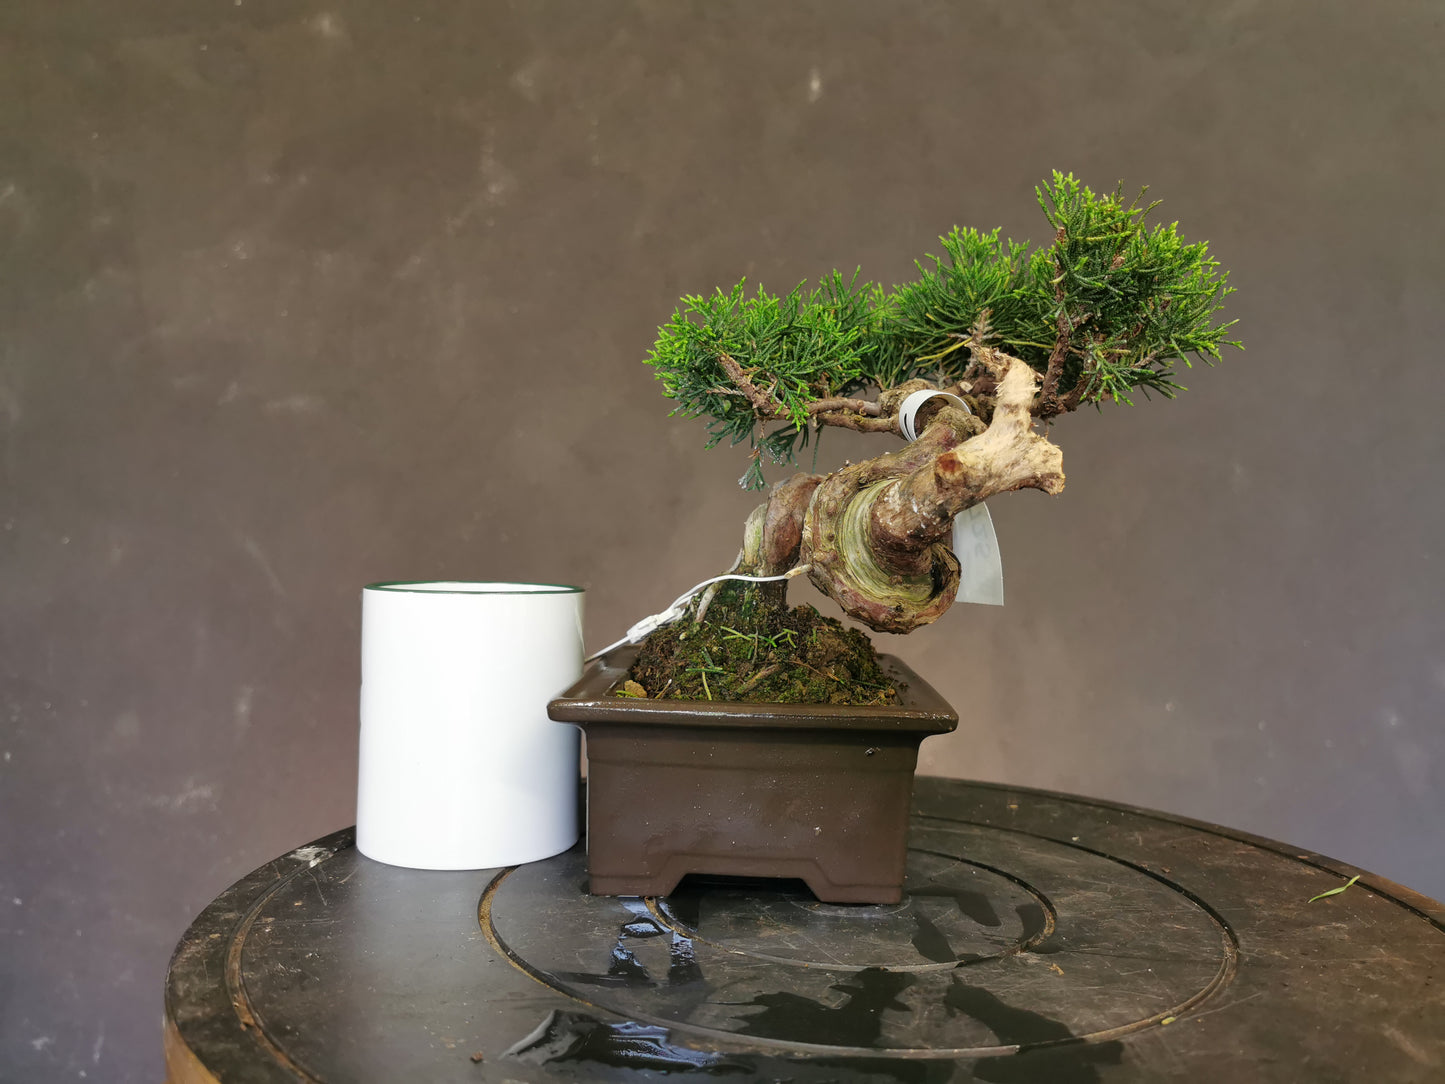 Bonsai Juniperus Chinensis